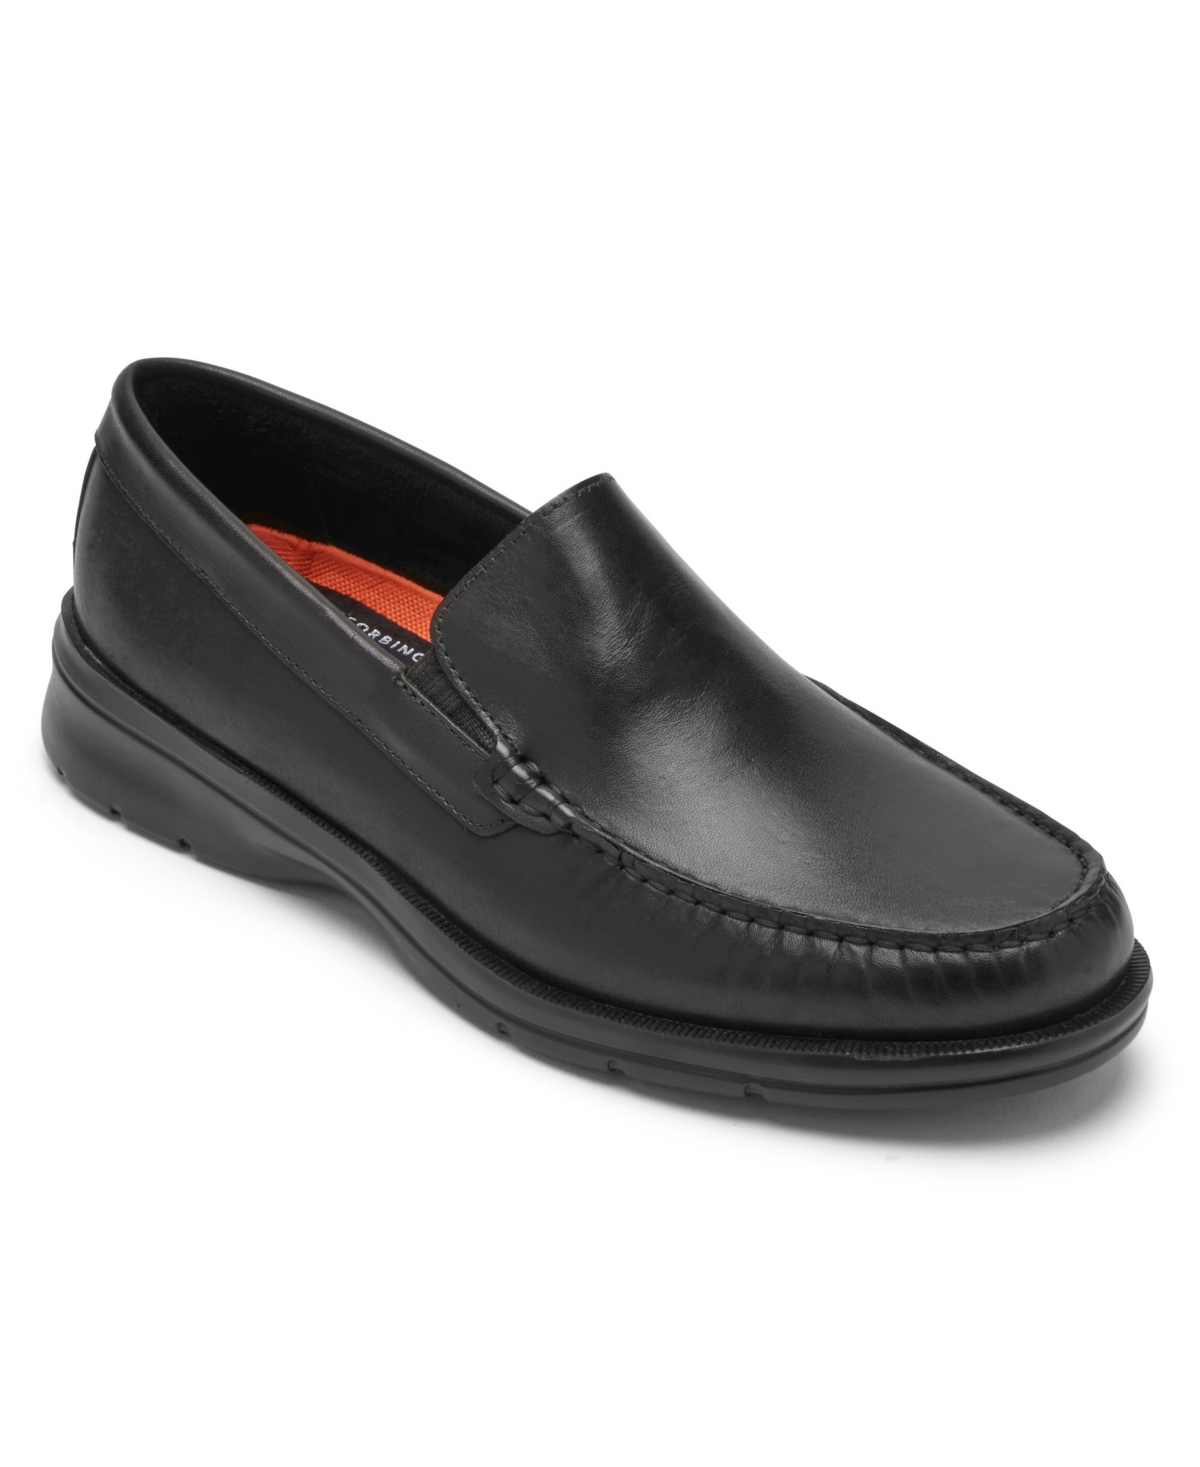 Men's Palmer Venetian Loafer Shoes - Black